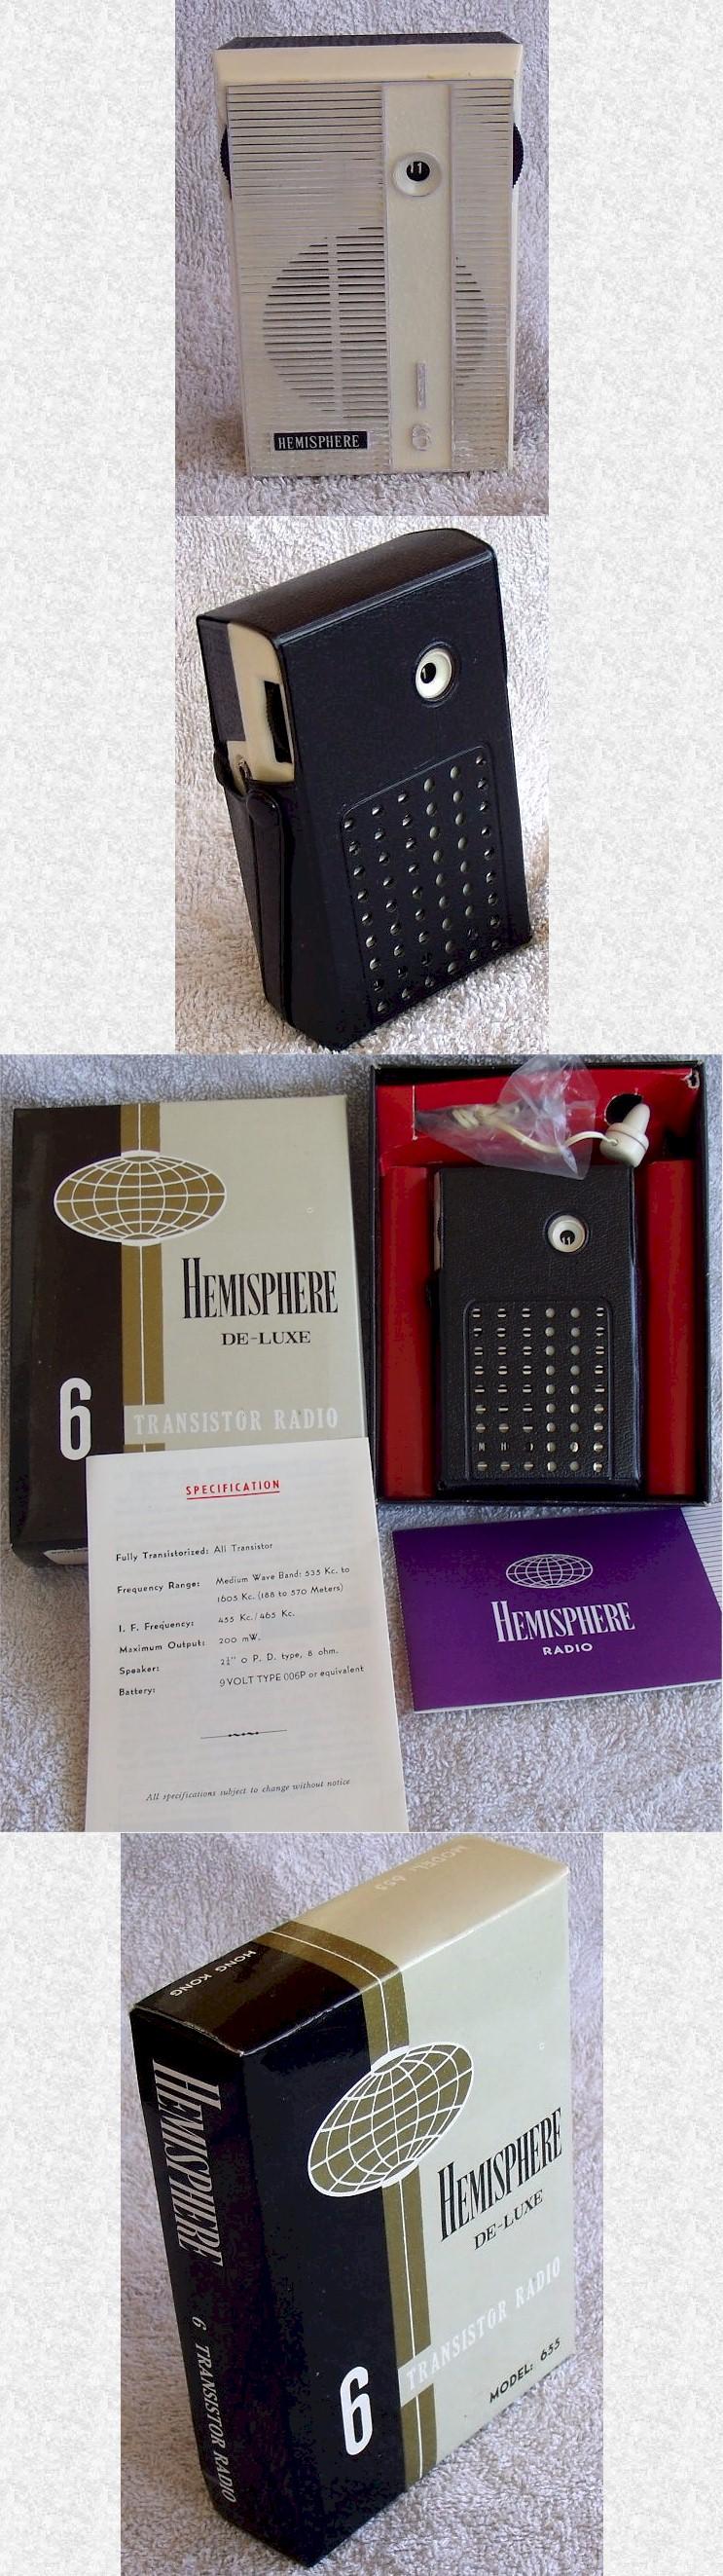 Hemisphere 655 Pocket Transistor (late 60s)